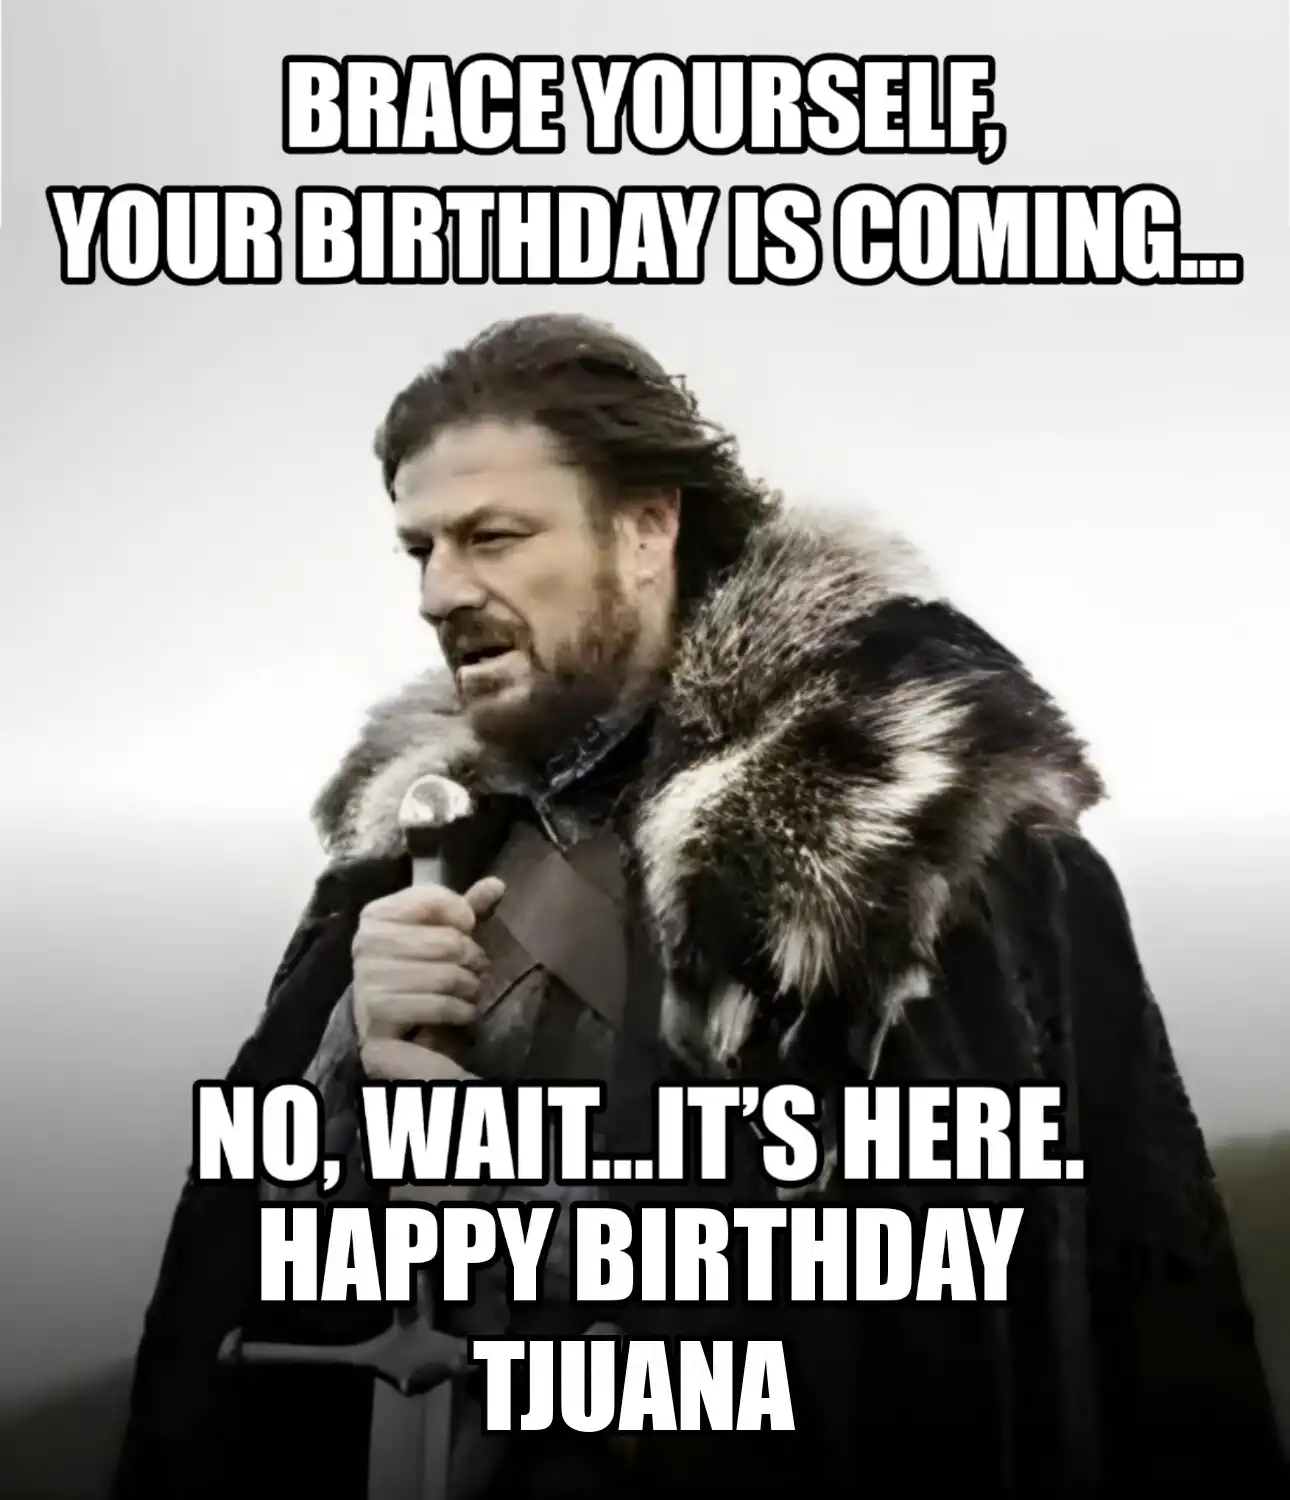 Happy Birthday Tjuana Brace Yourself Your Birthday Is Coming Meme